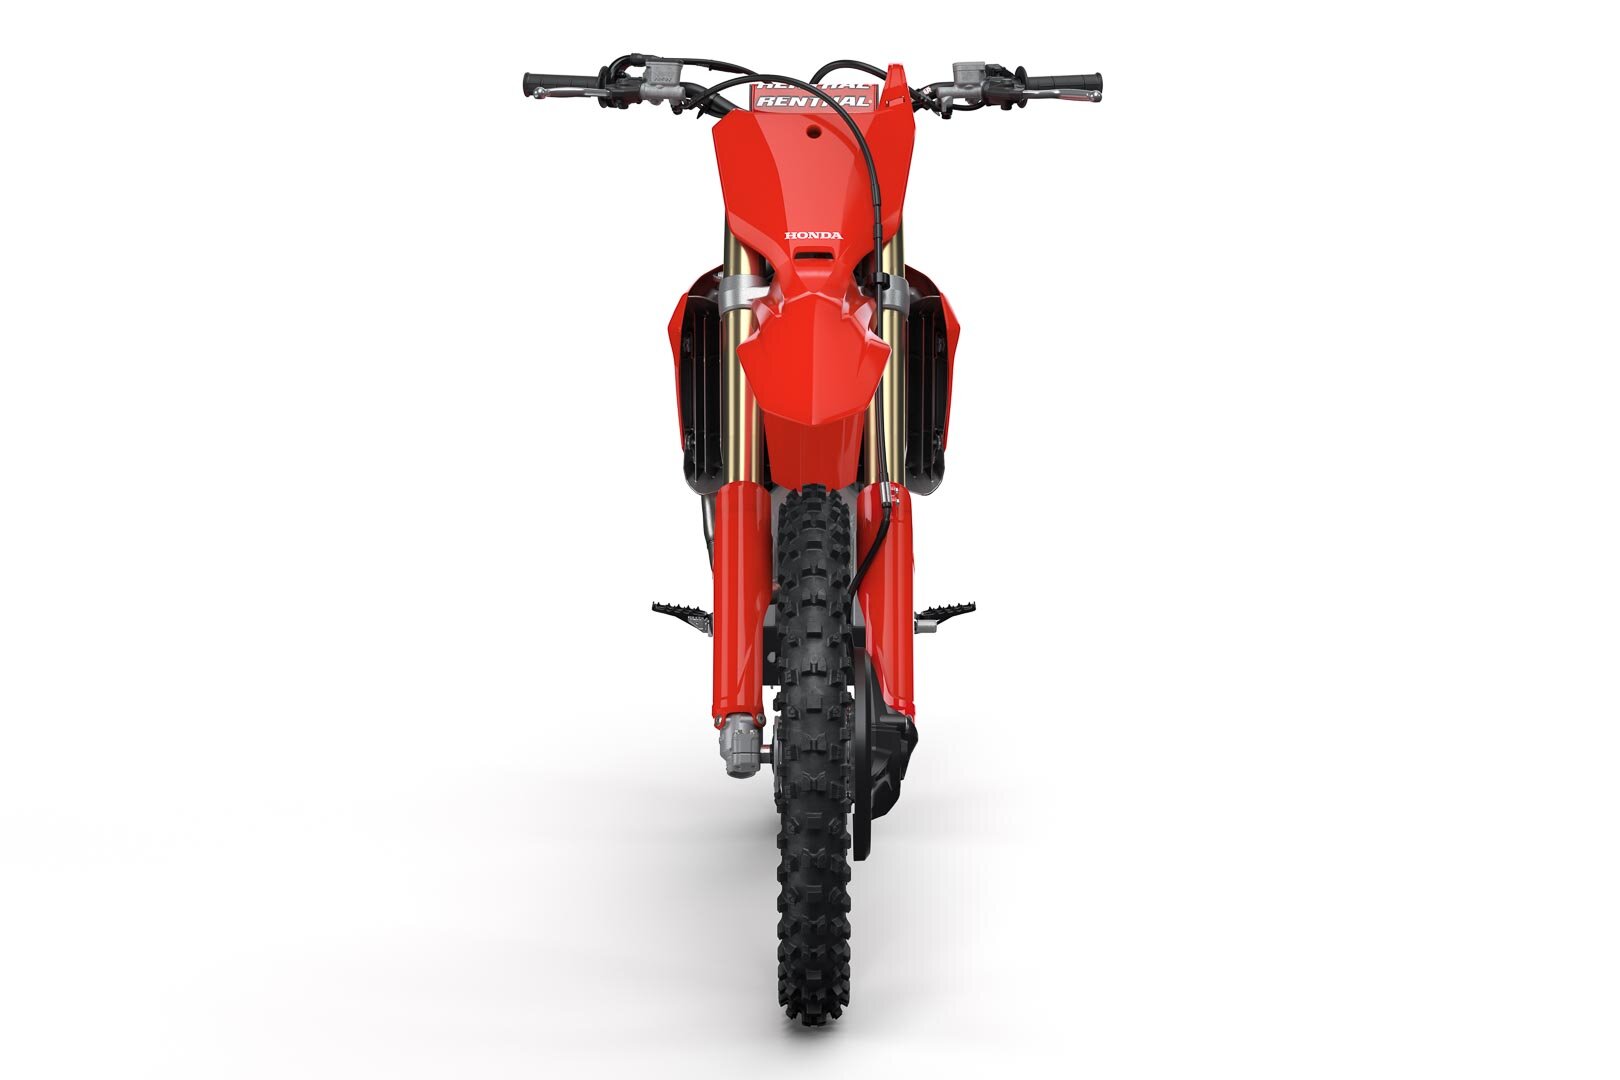 2021-Honda-CRF450R-First-Look-motocross-supercross-motorcycle-3.jpg